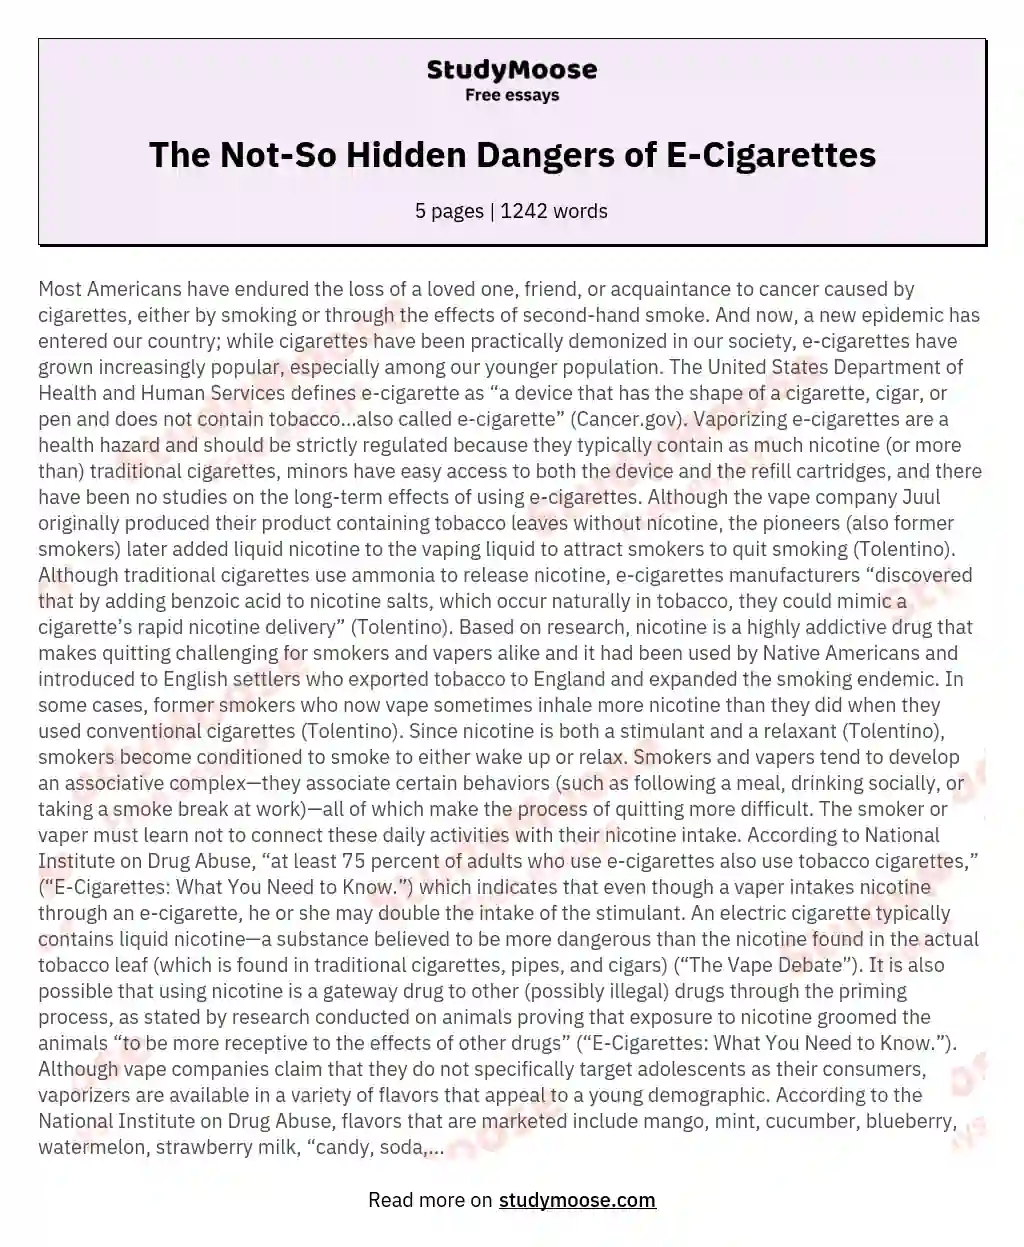 The Not-So Hidden Dangers of E-Cigarettes essay